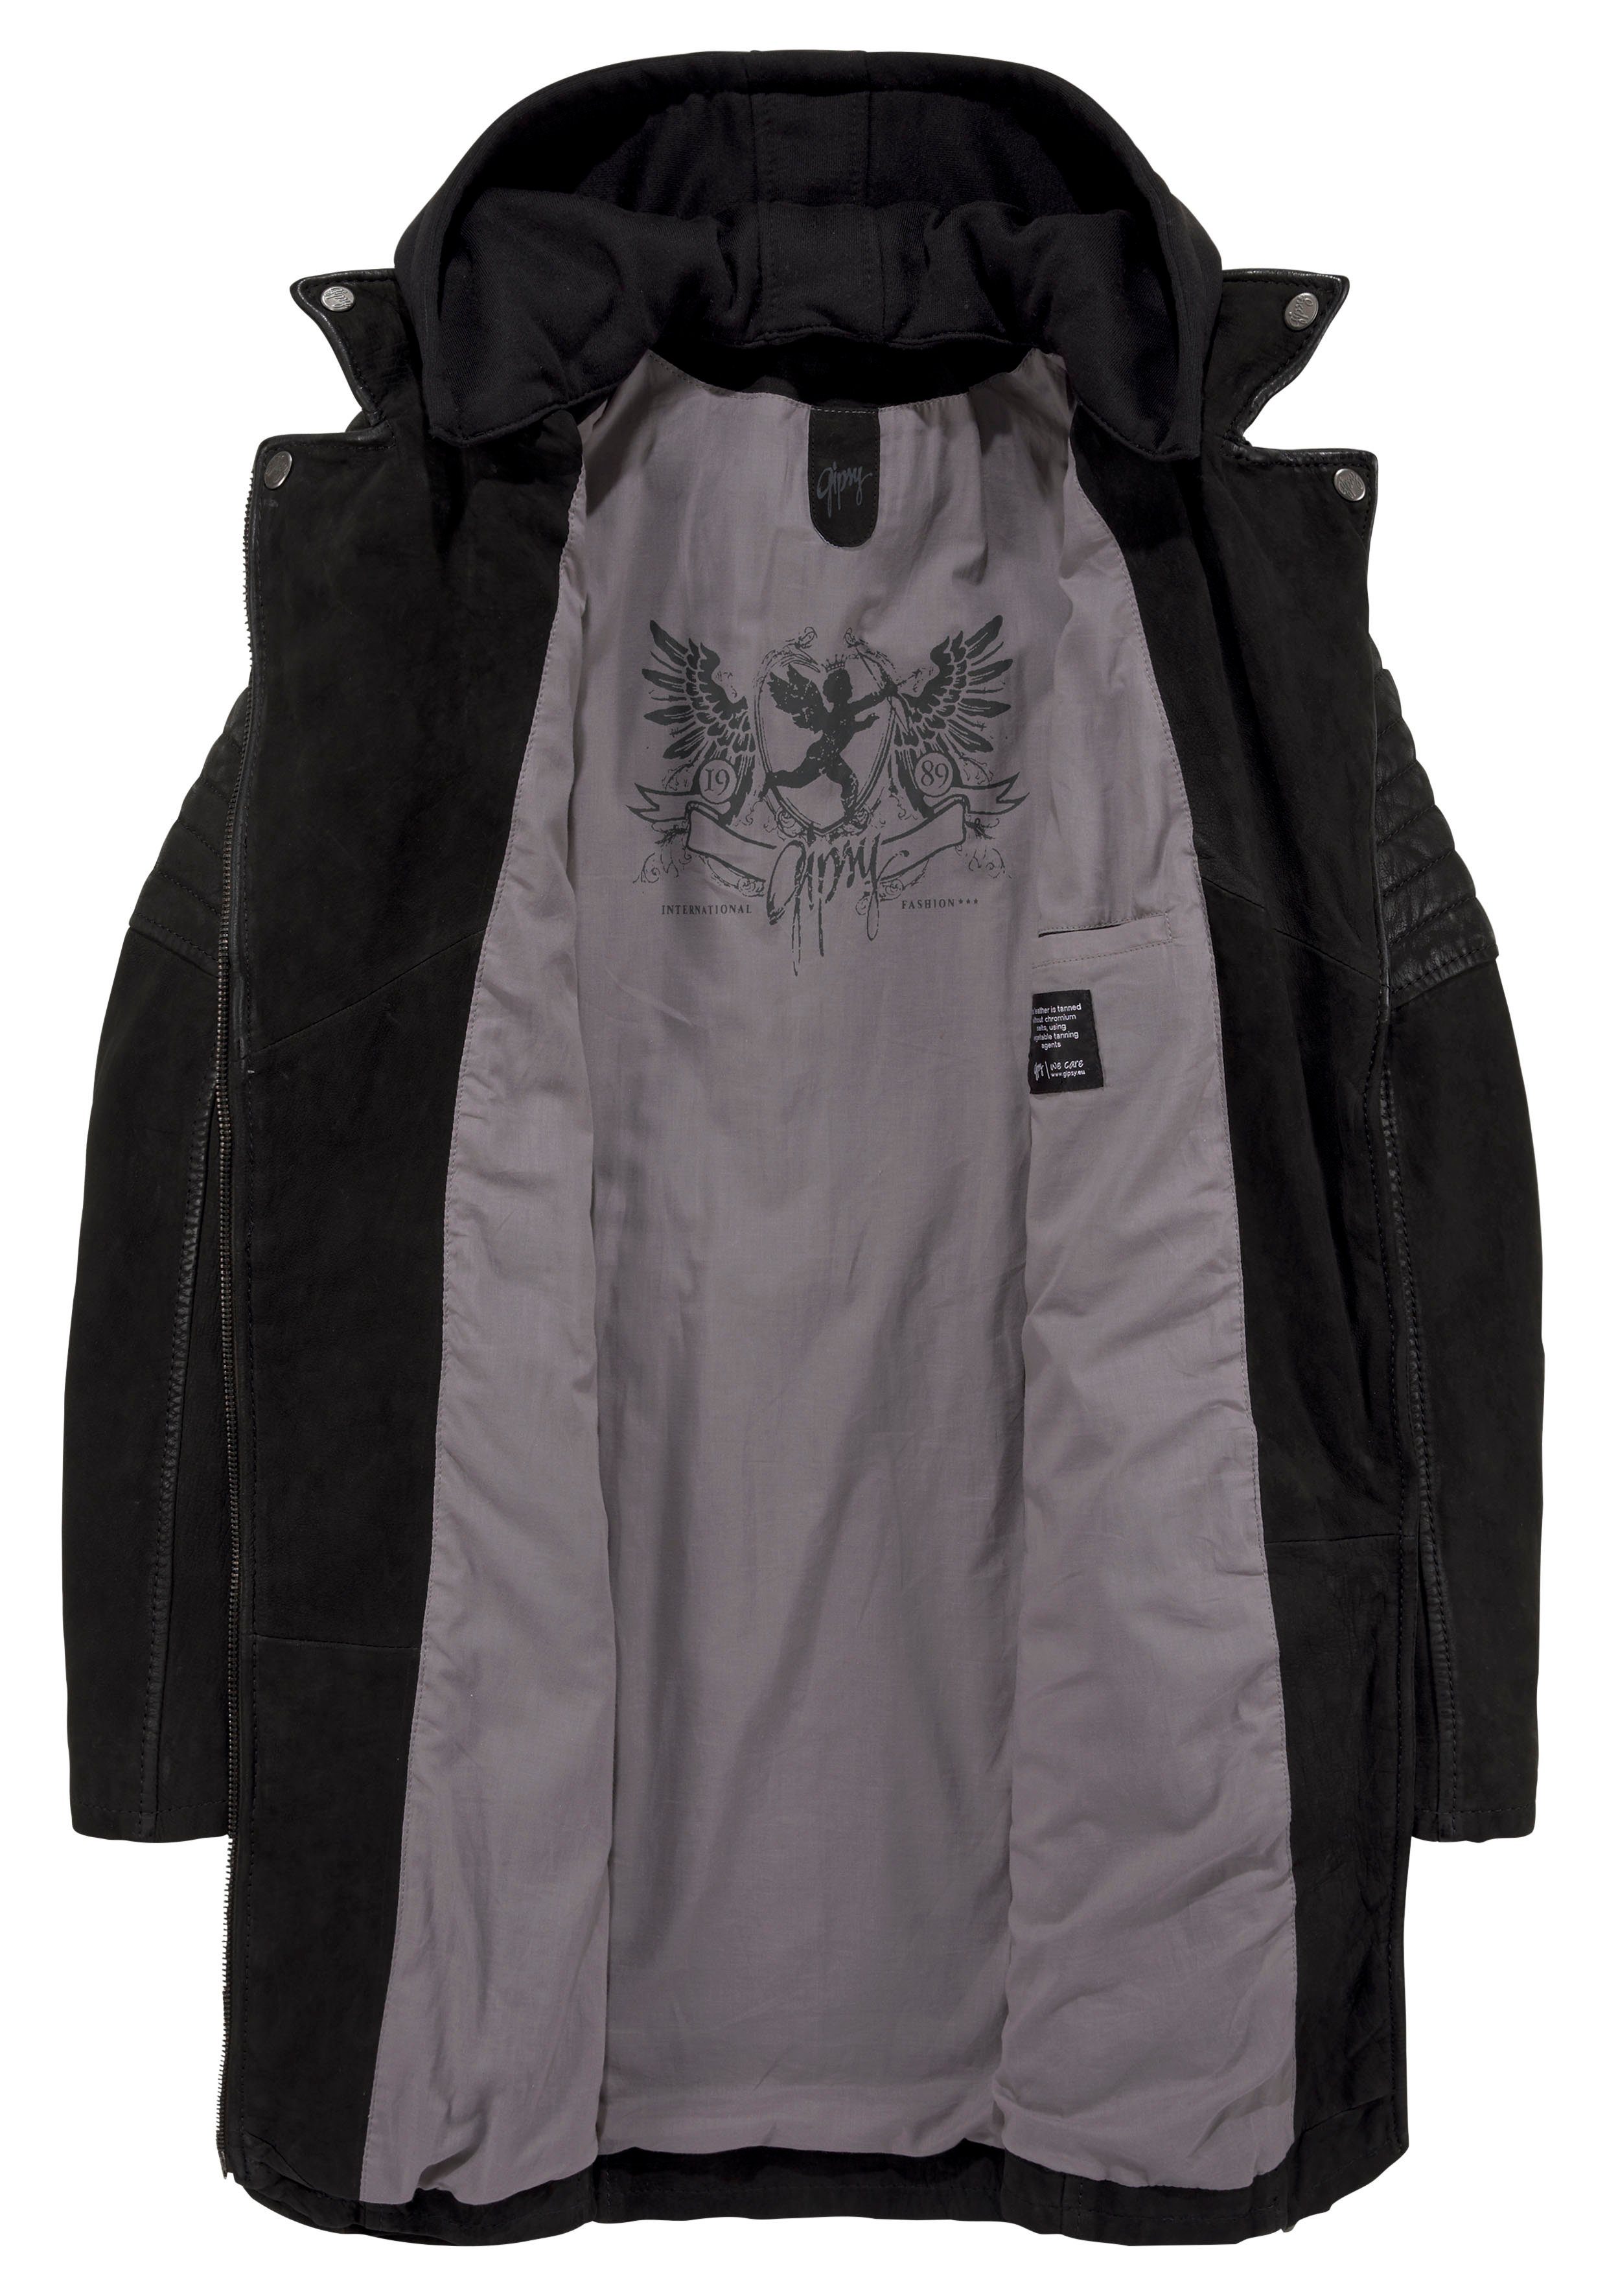 Lederjacke CYARA aus Gipsy abnehmbarem Kapuzen-Inlay Lederjacke mit schwarz Jerseyqualität